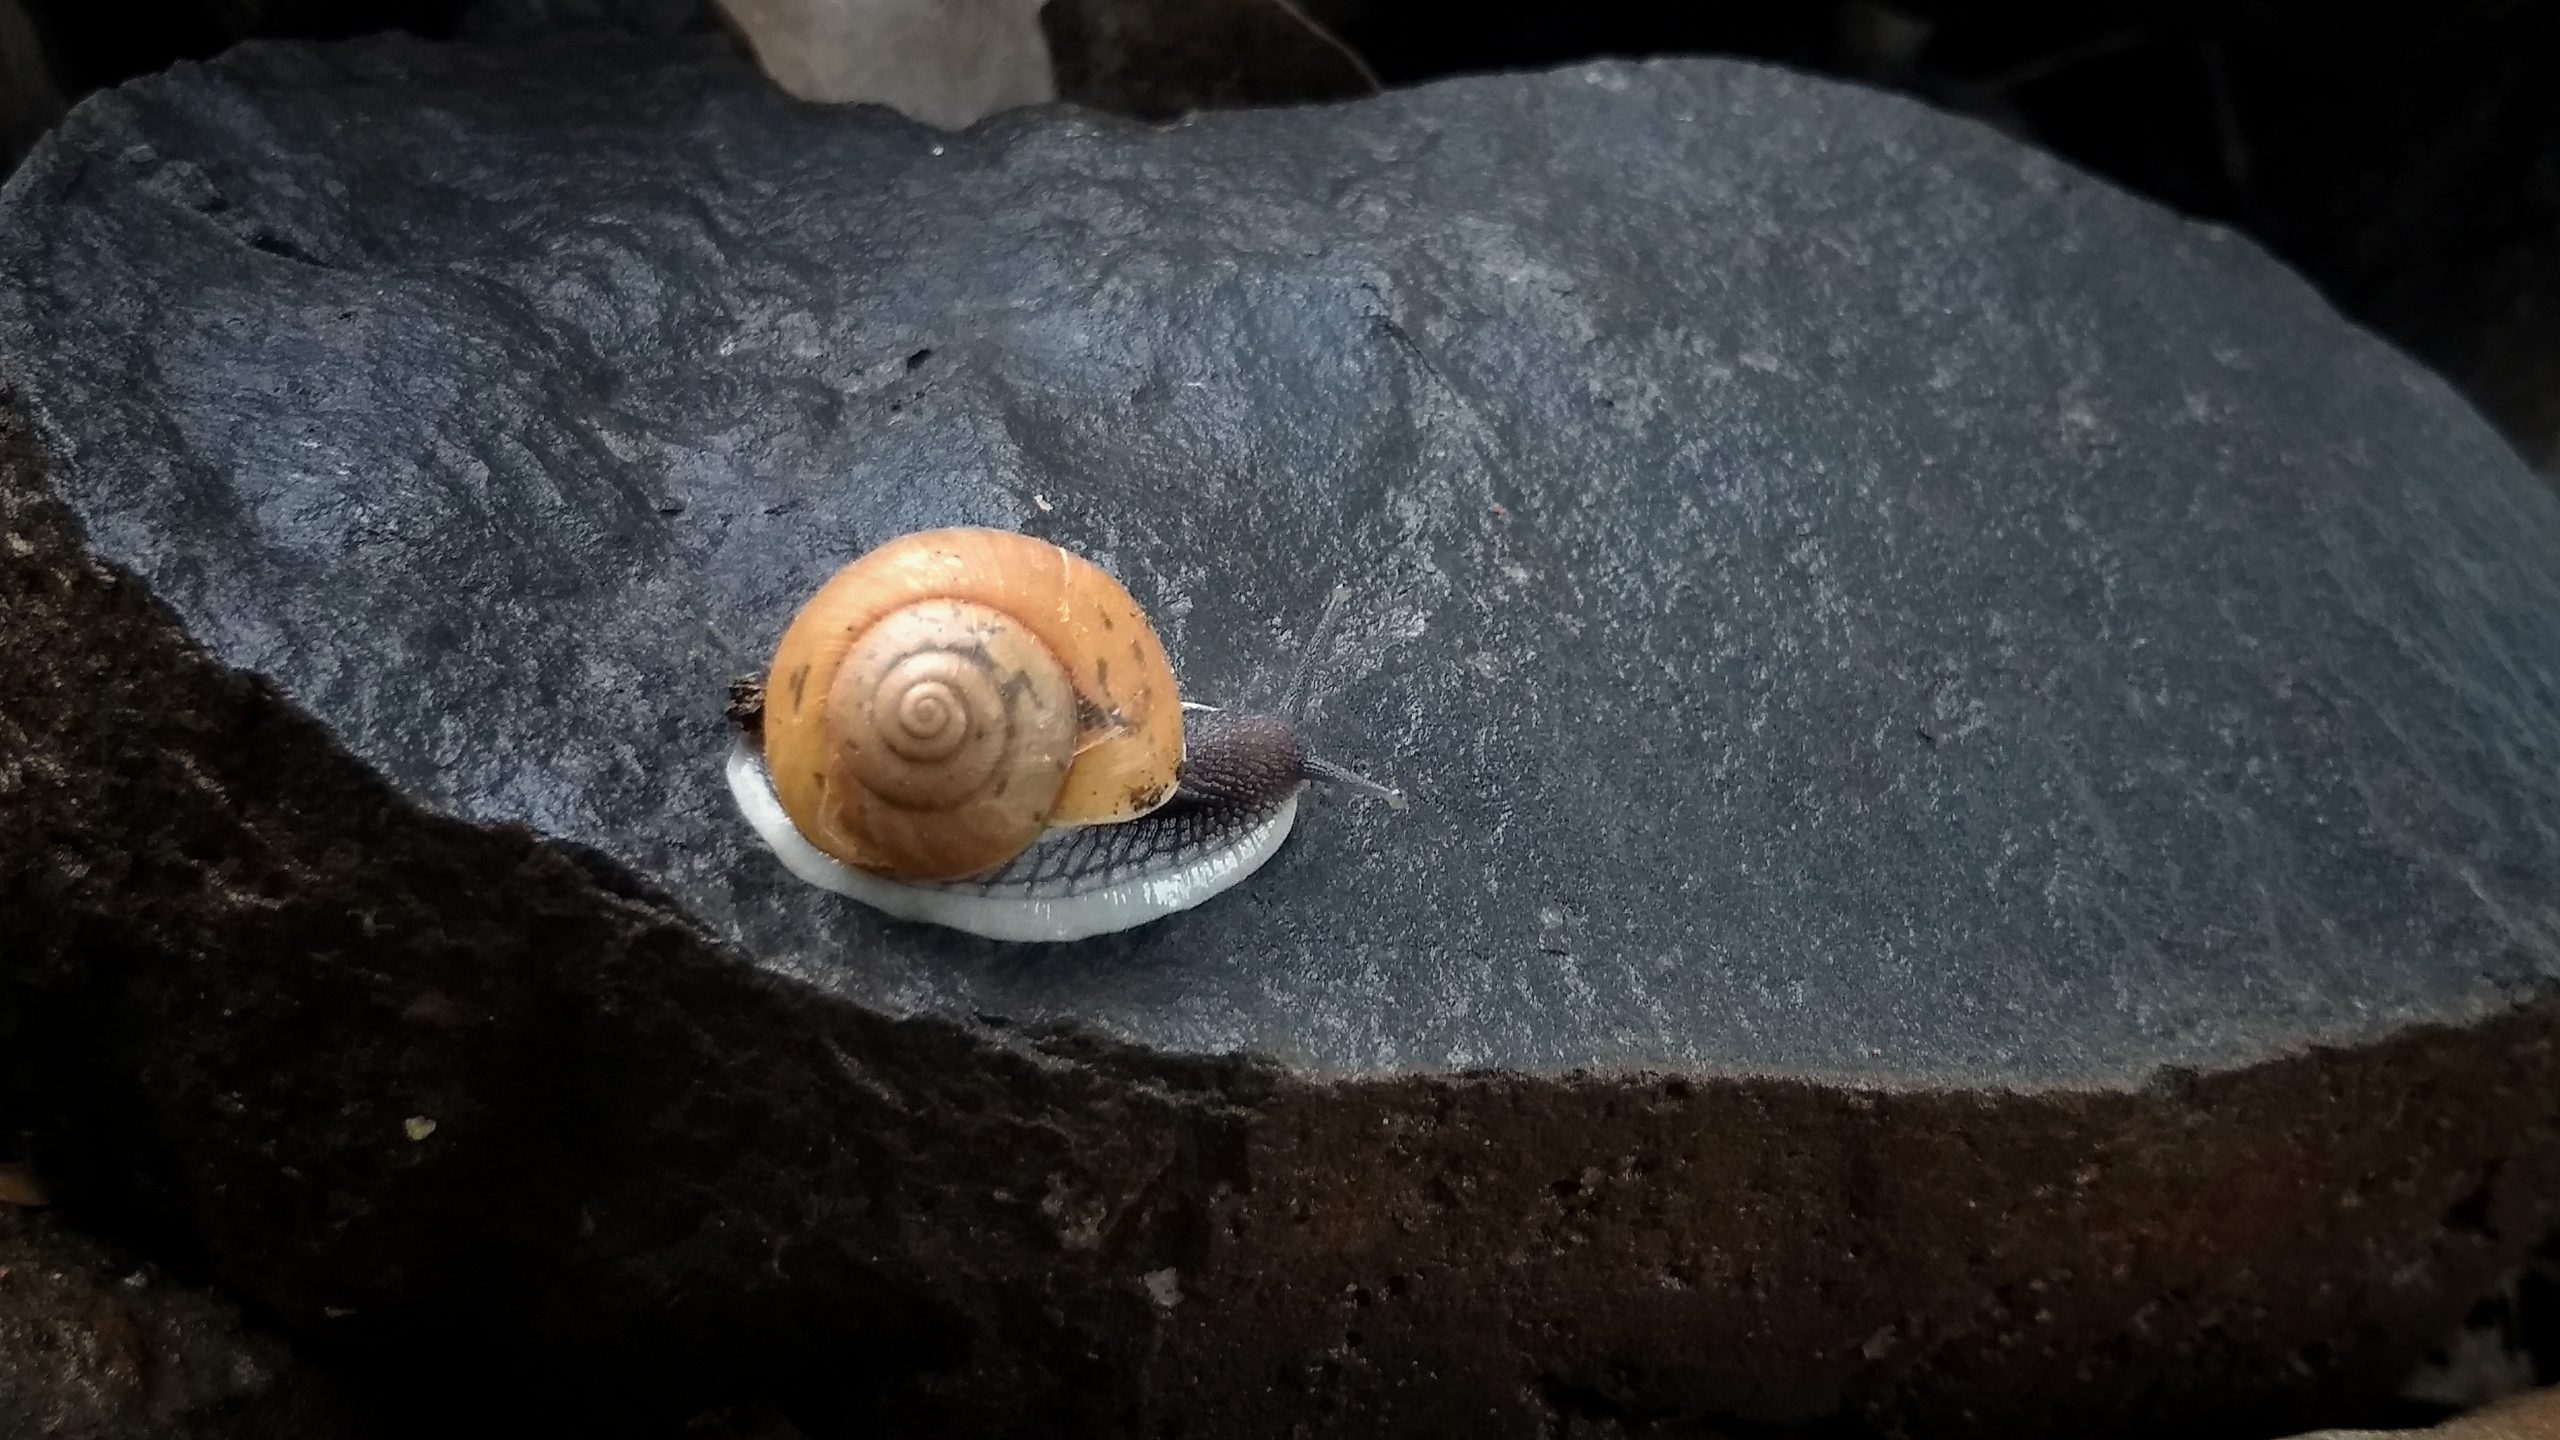 Cute guest of rainy season – Snail